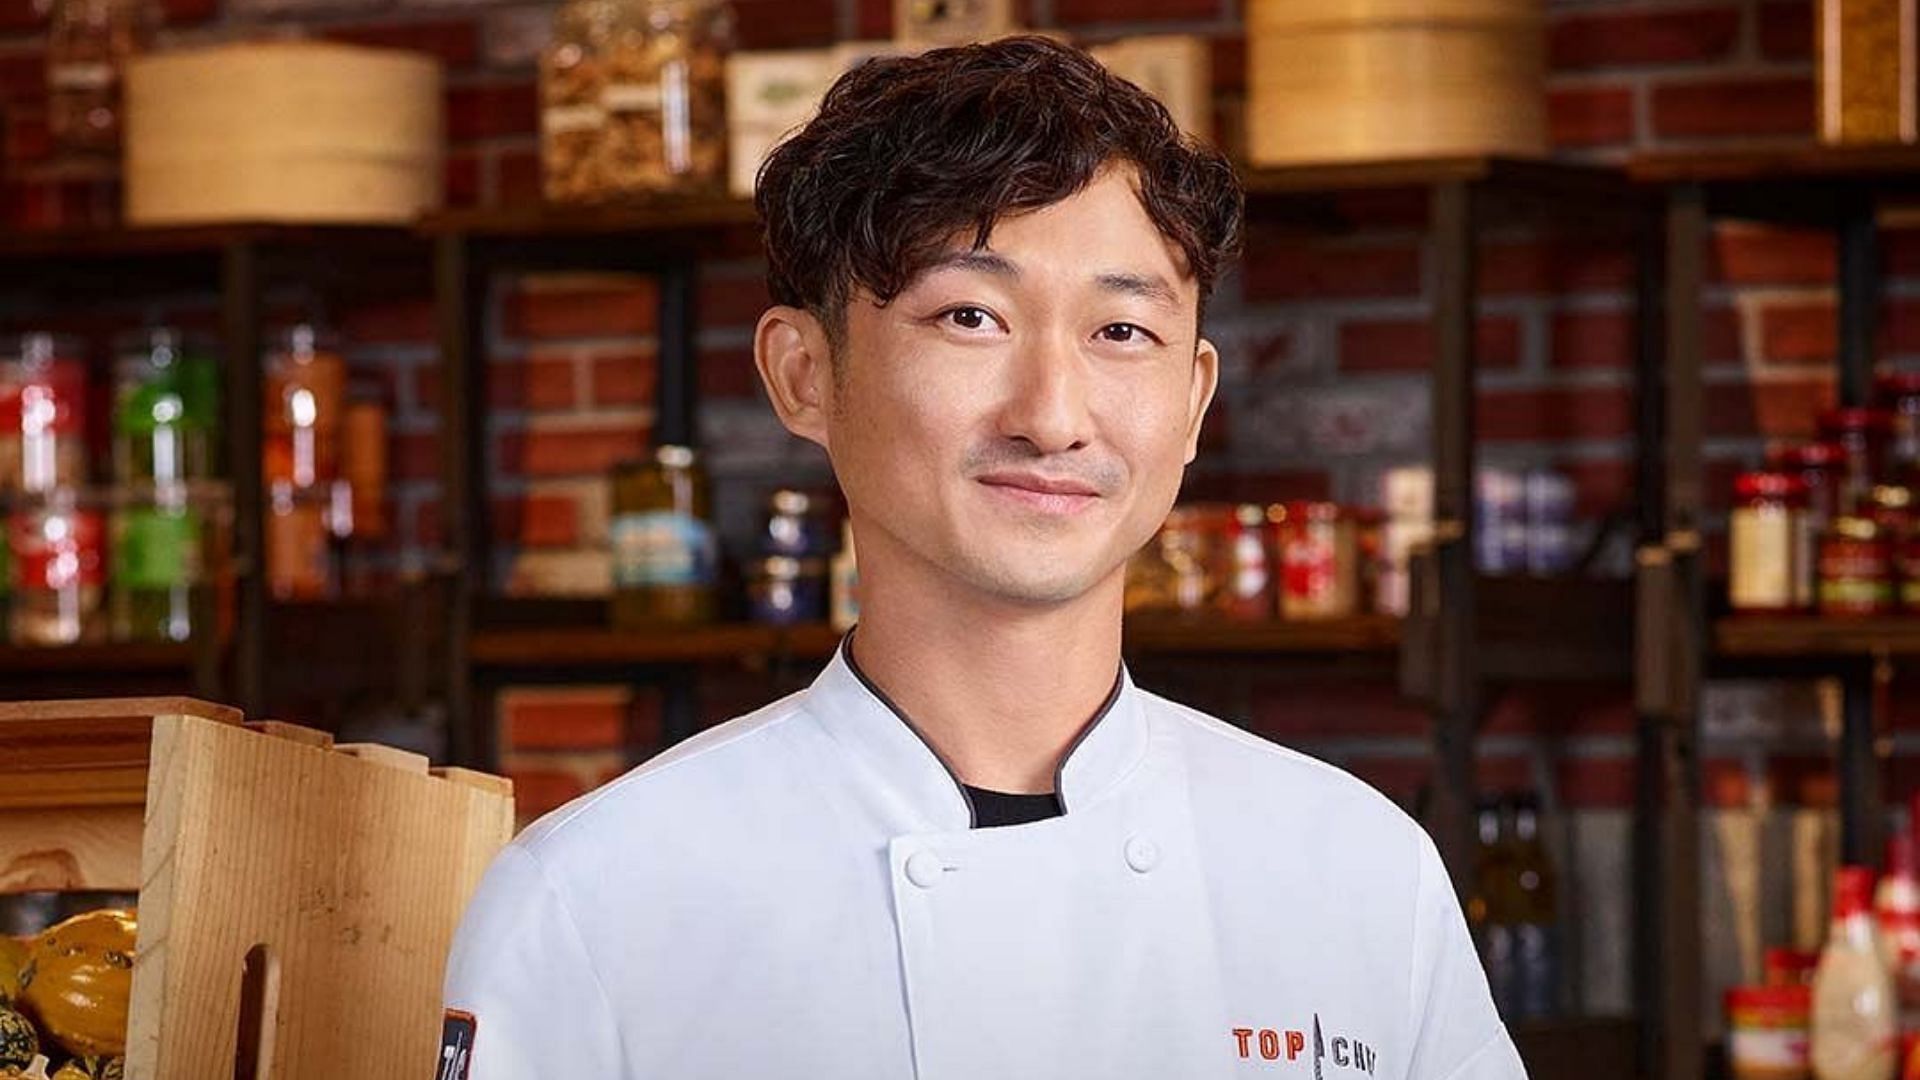 Top Chef Season 19 participant Sam Kang (Image via chefsamkang/Instagram)